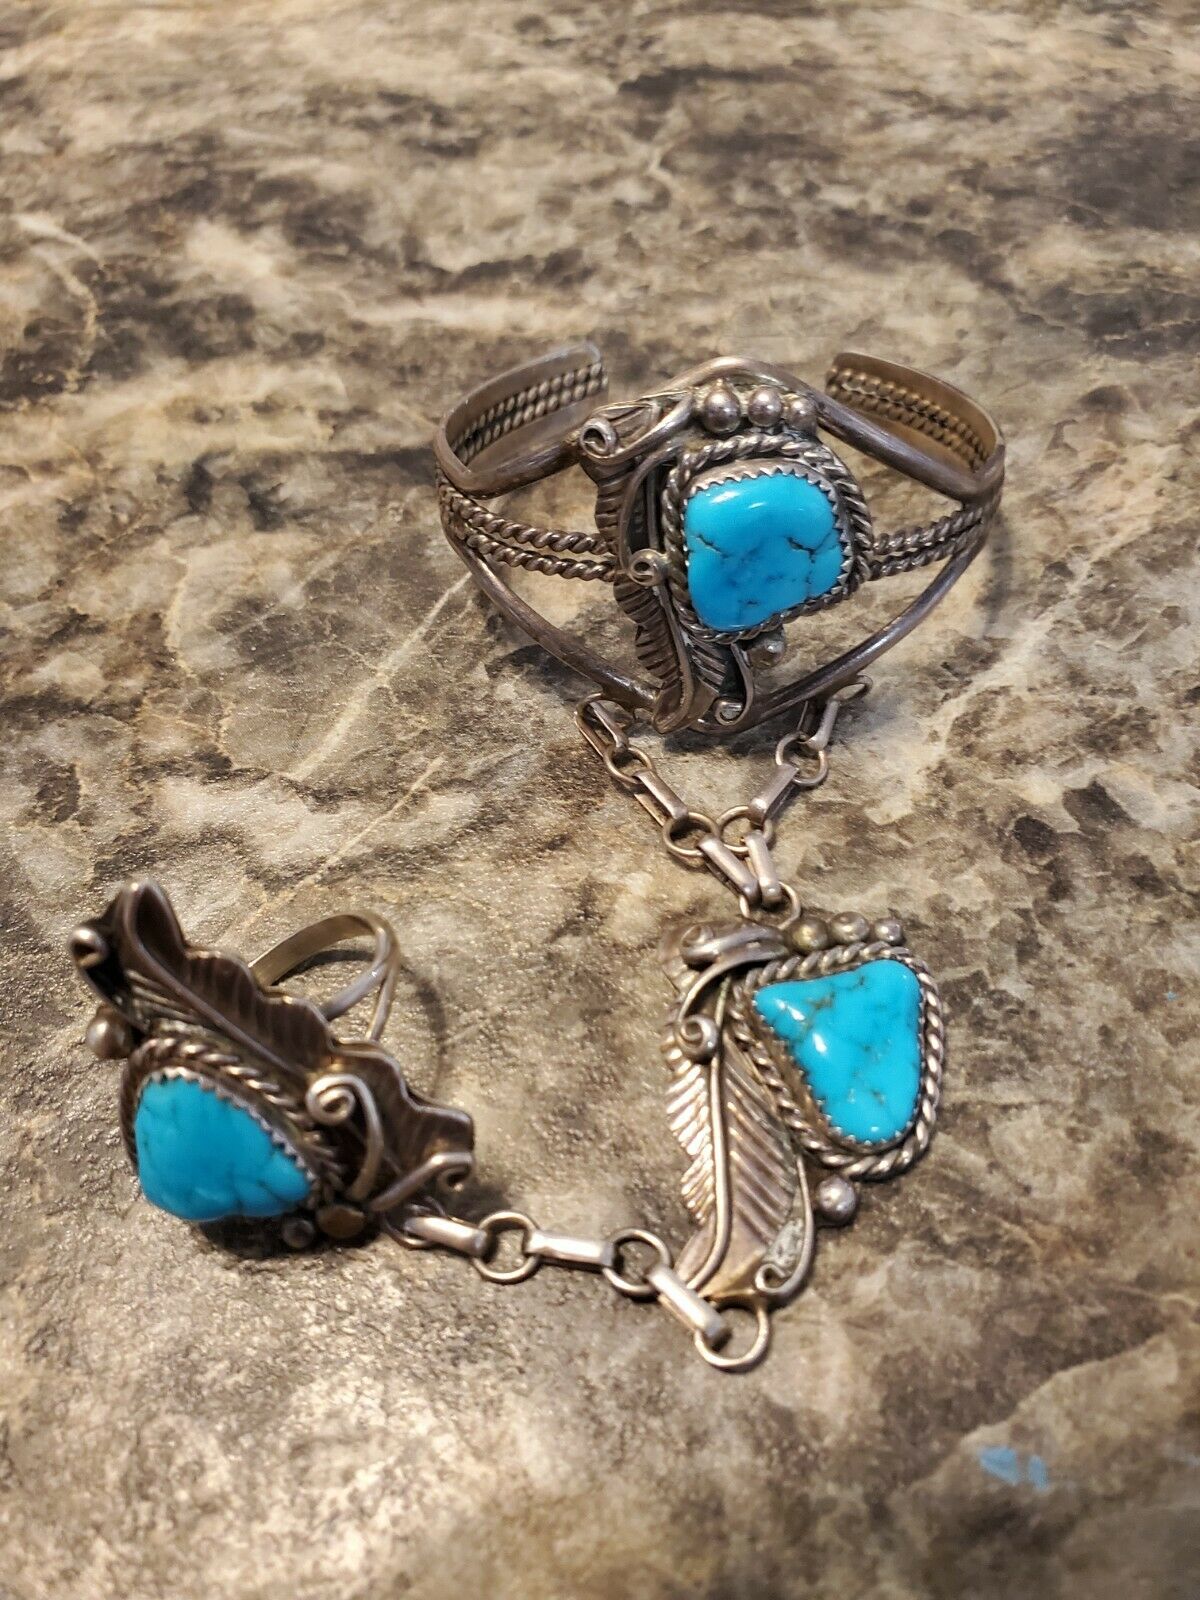 Turquoise & Sterling Silver Slave Bracelet & Ring - Vintage, Beautiful, Signed